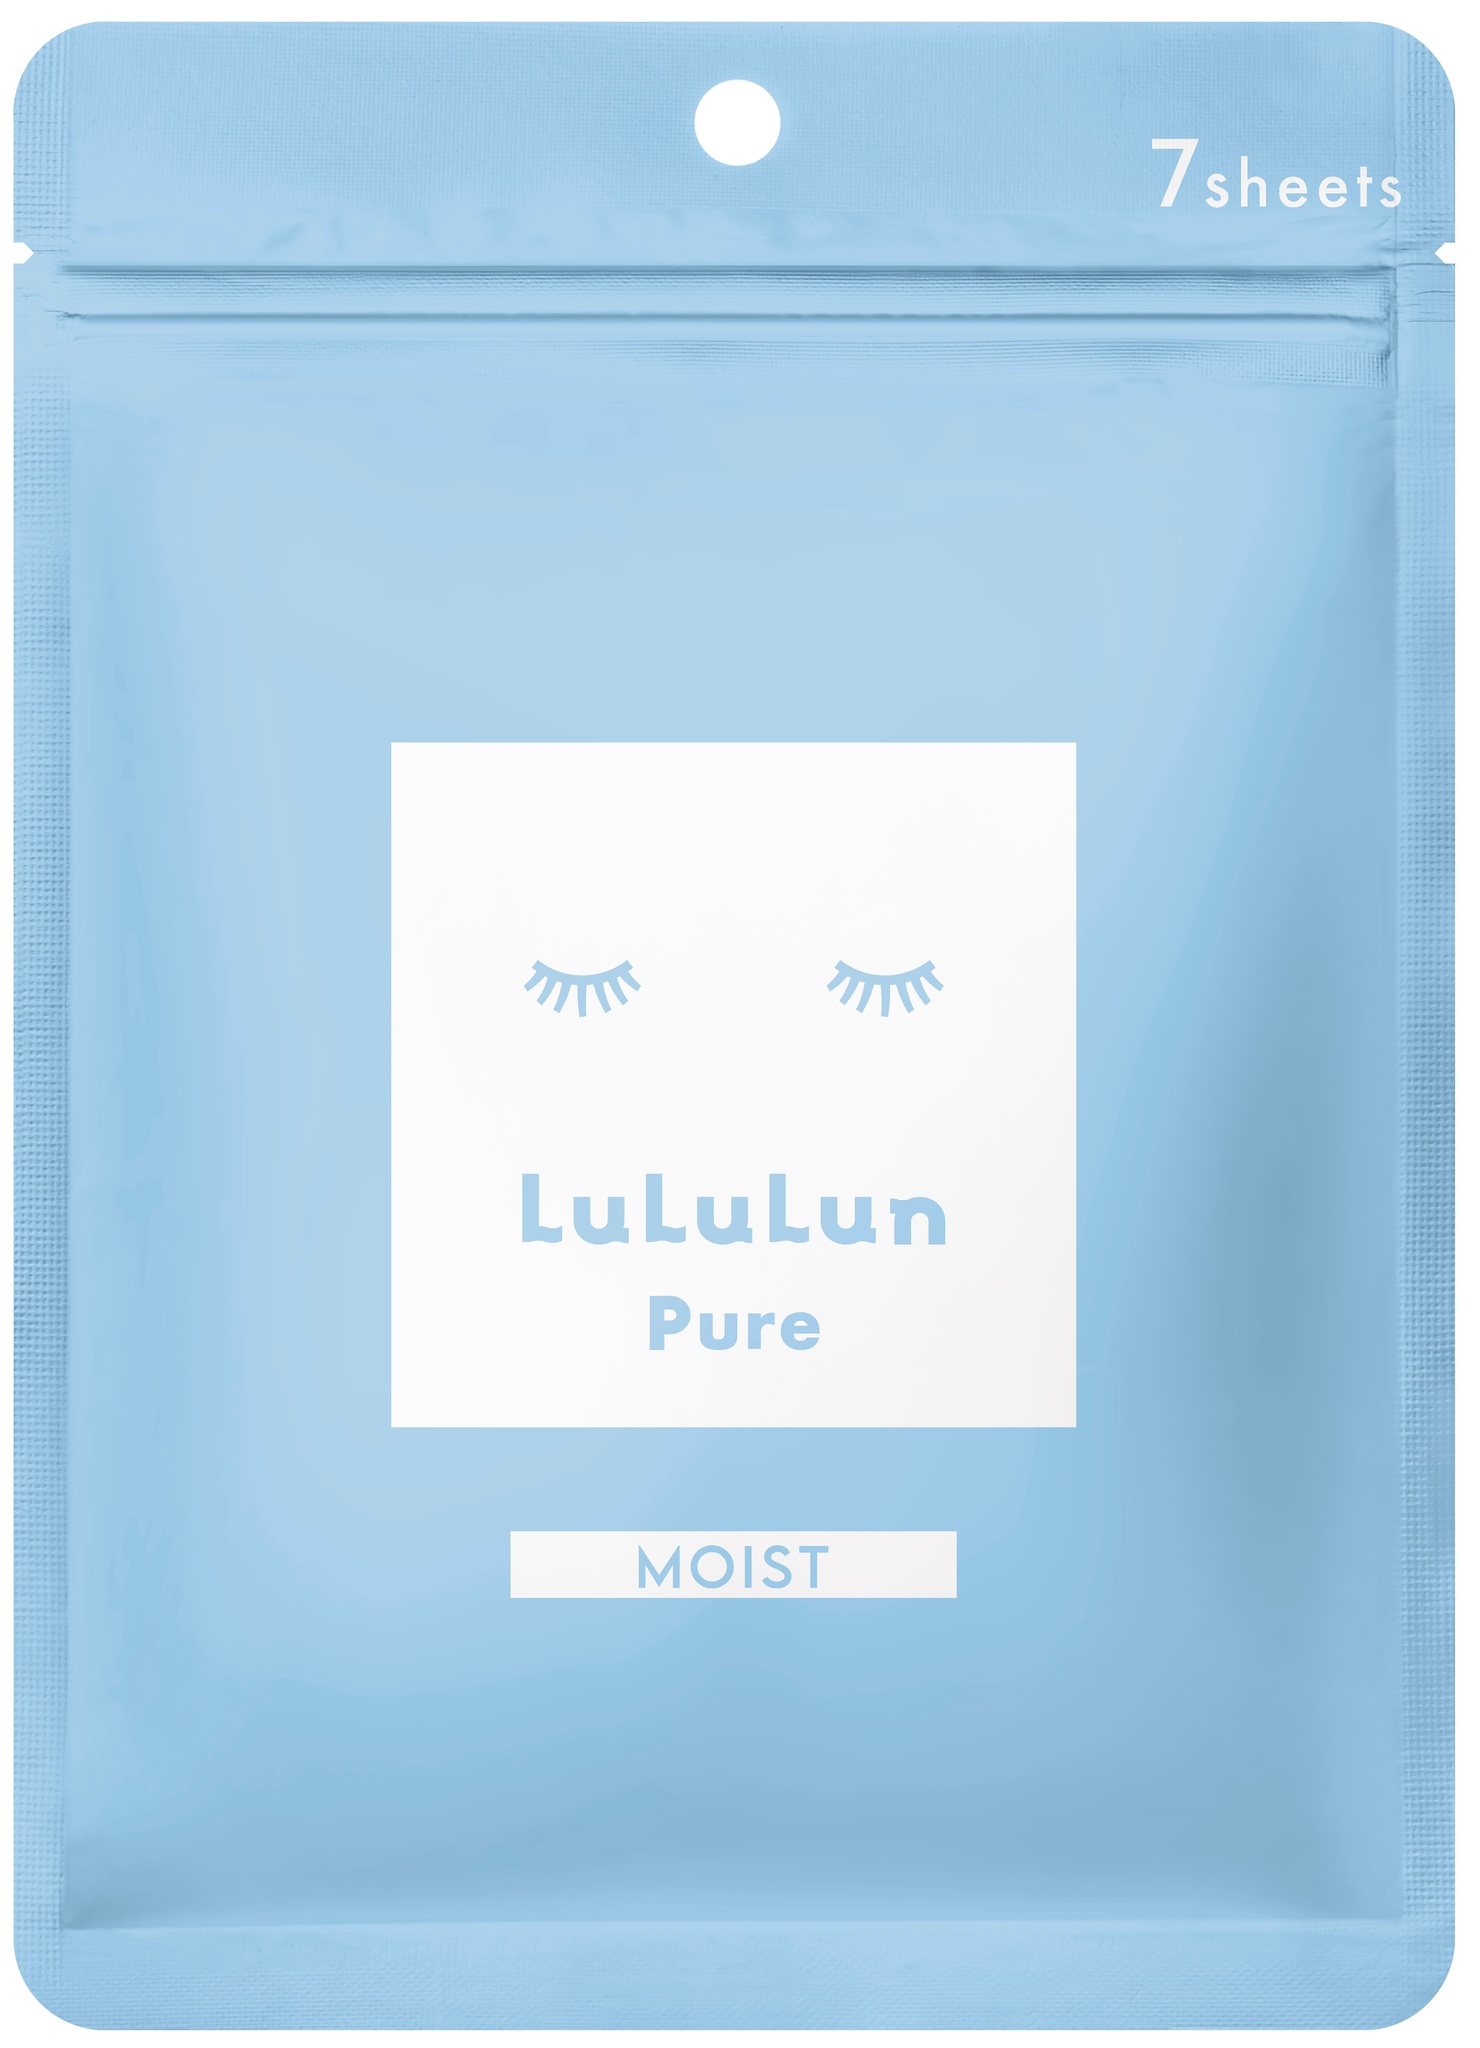 Lululun Pure Moist Mask